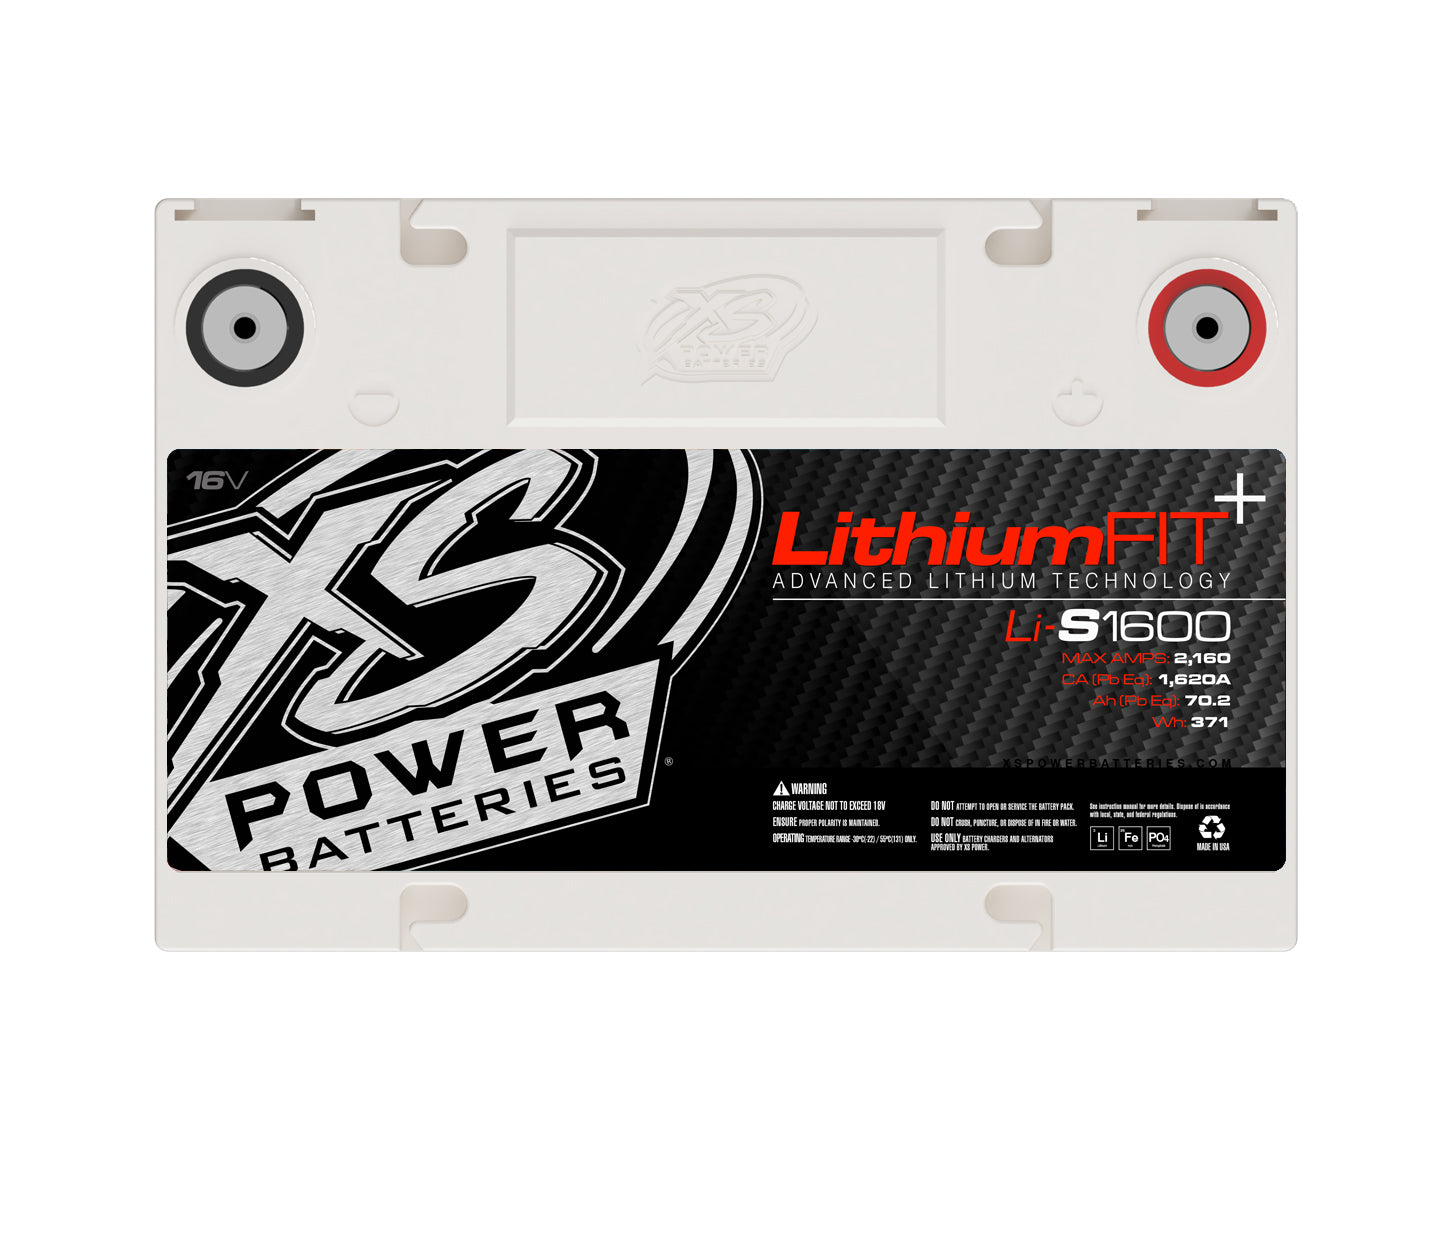 Li-S1600 XS Power 16VDC Lithium Racing Vehicle Battery 2160A 23.4Ah Group 34